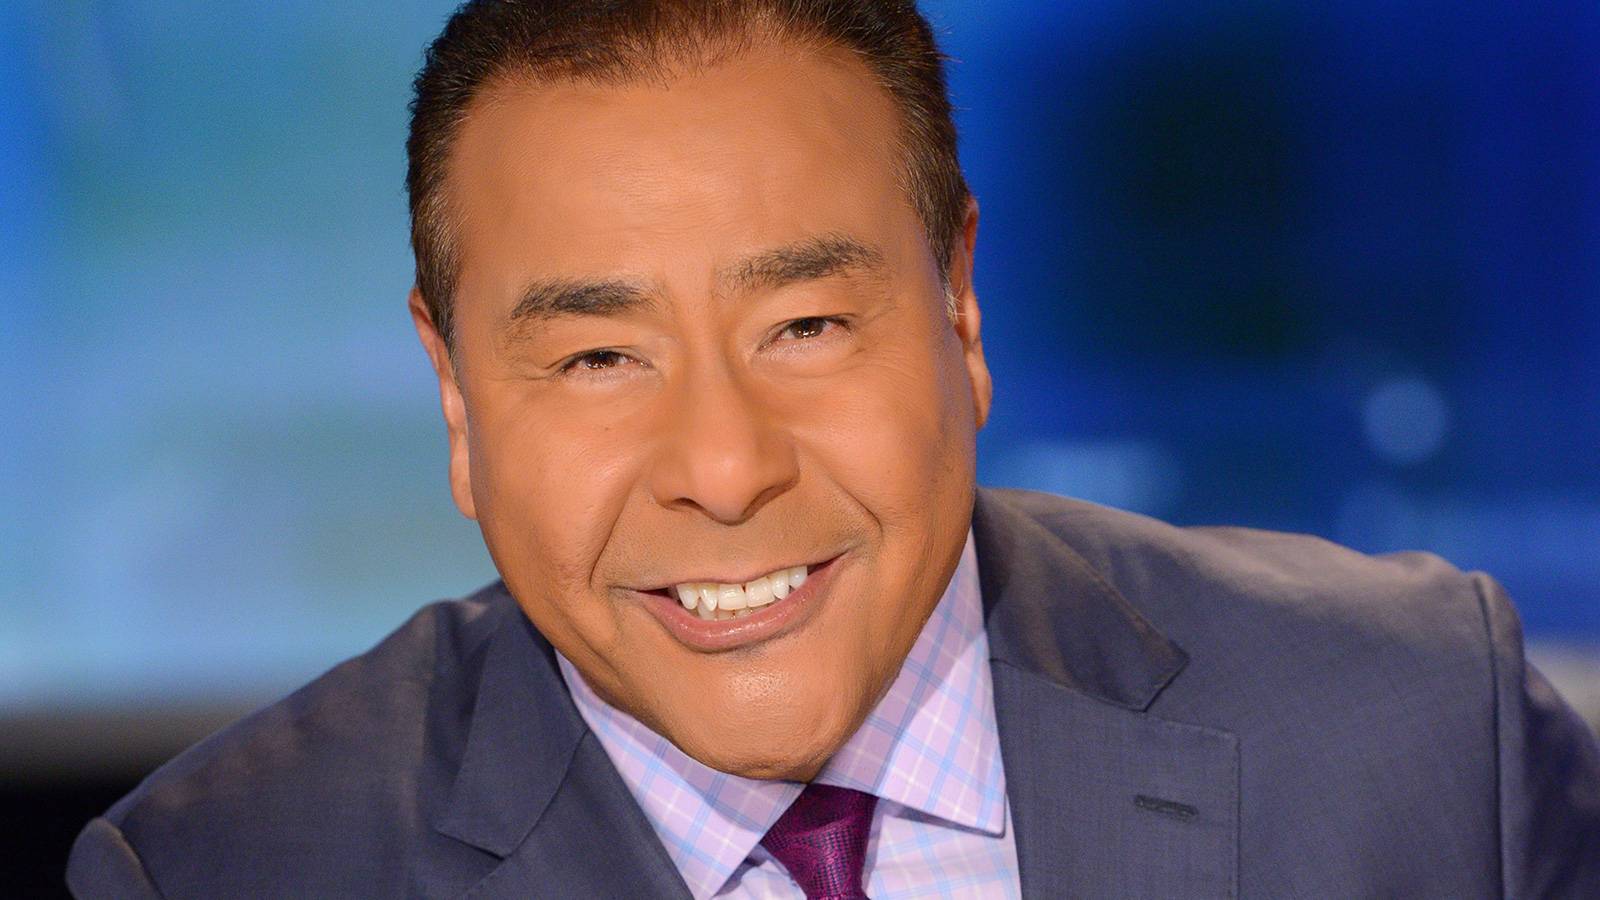 John Quiñones smiling on a TV news set